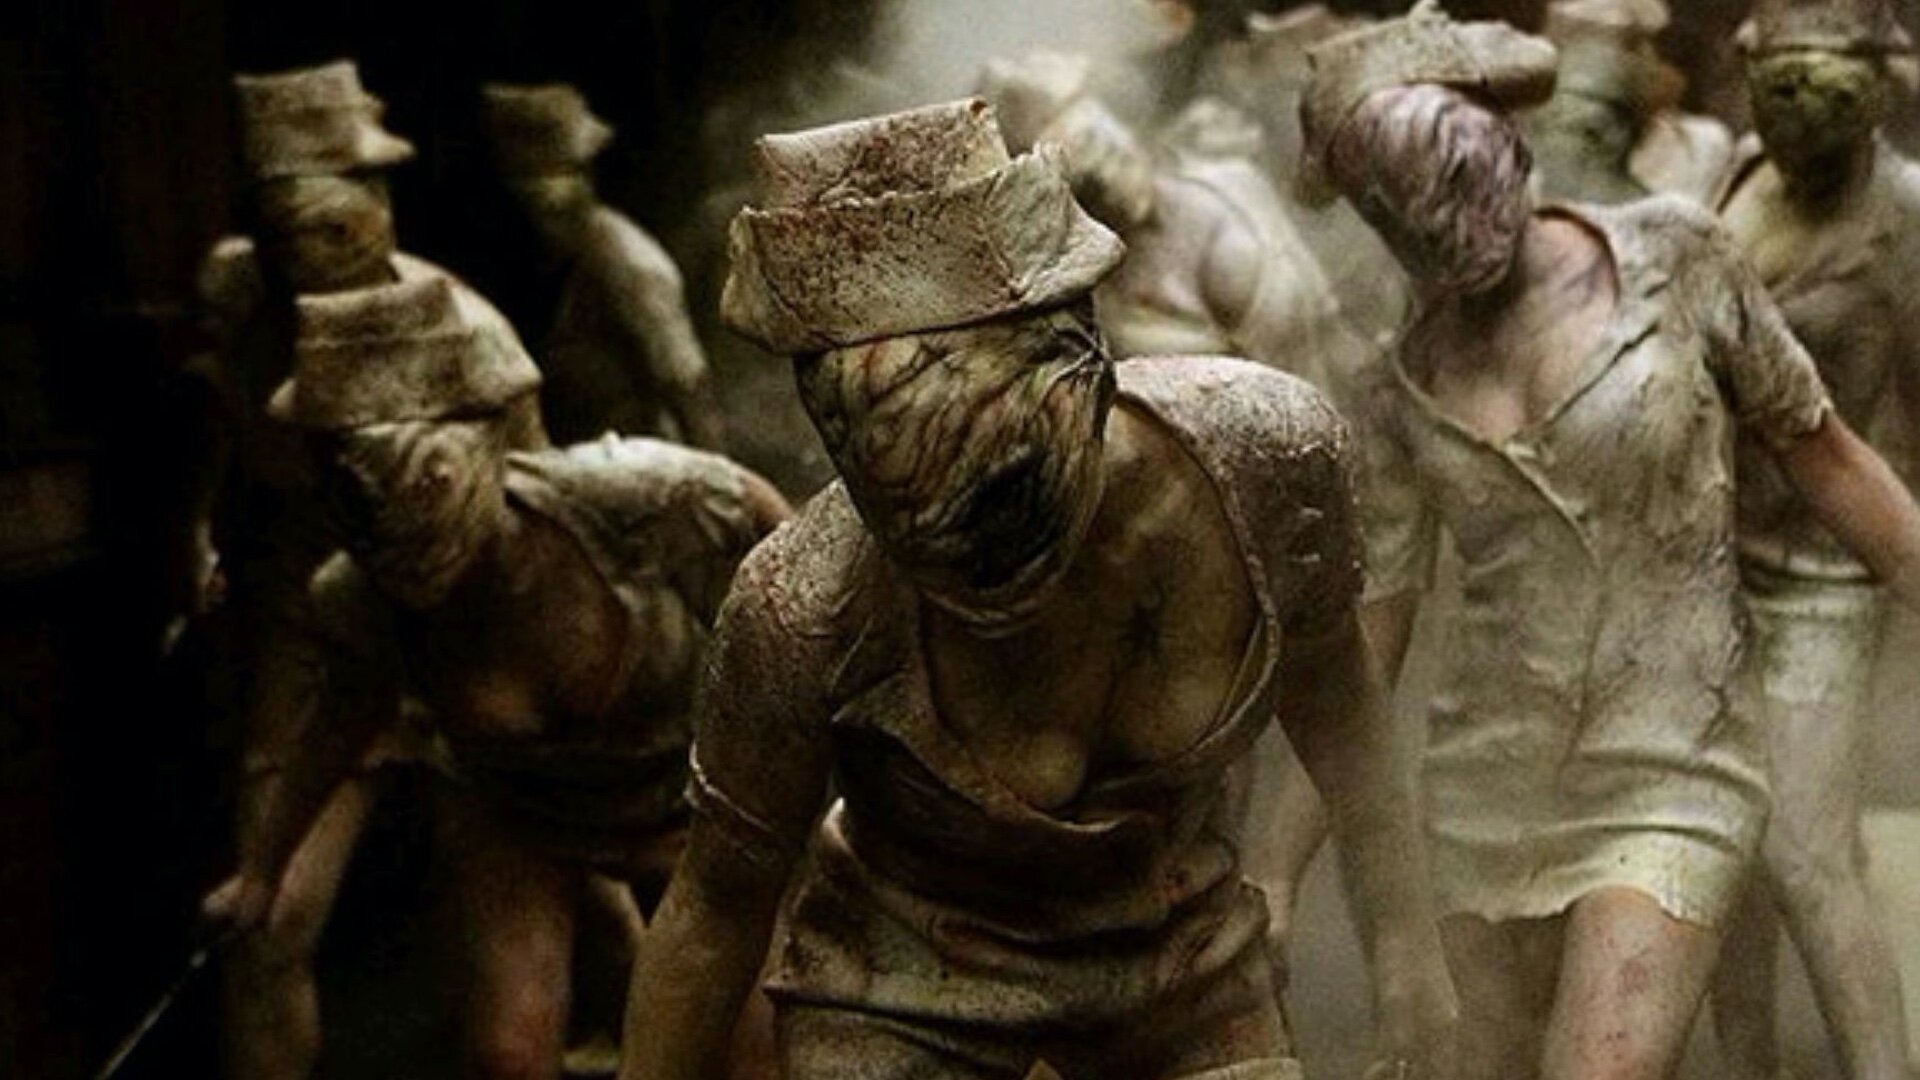 Resident Evil vs Silent Hill  - grossness isn’t necessarily scarier